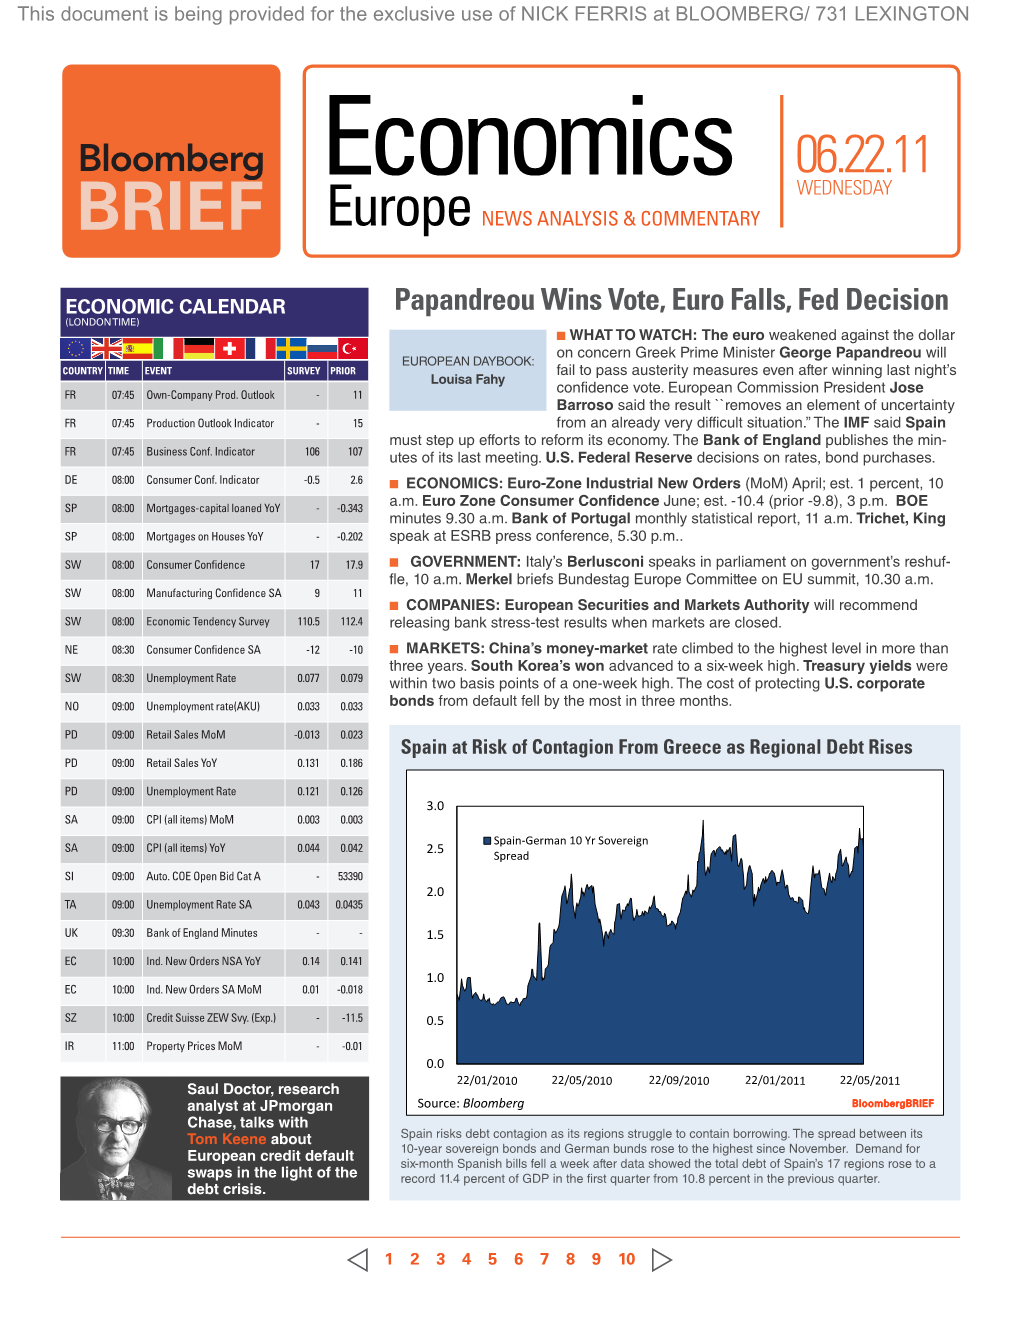 Economics Wednesday BRIEF Europe News Analysis & Commentary